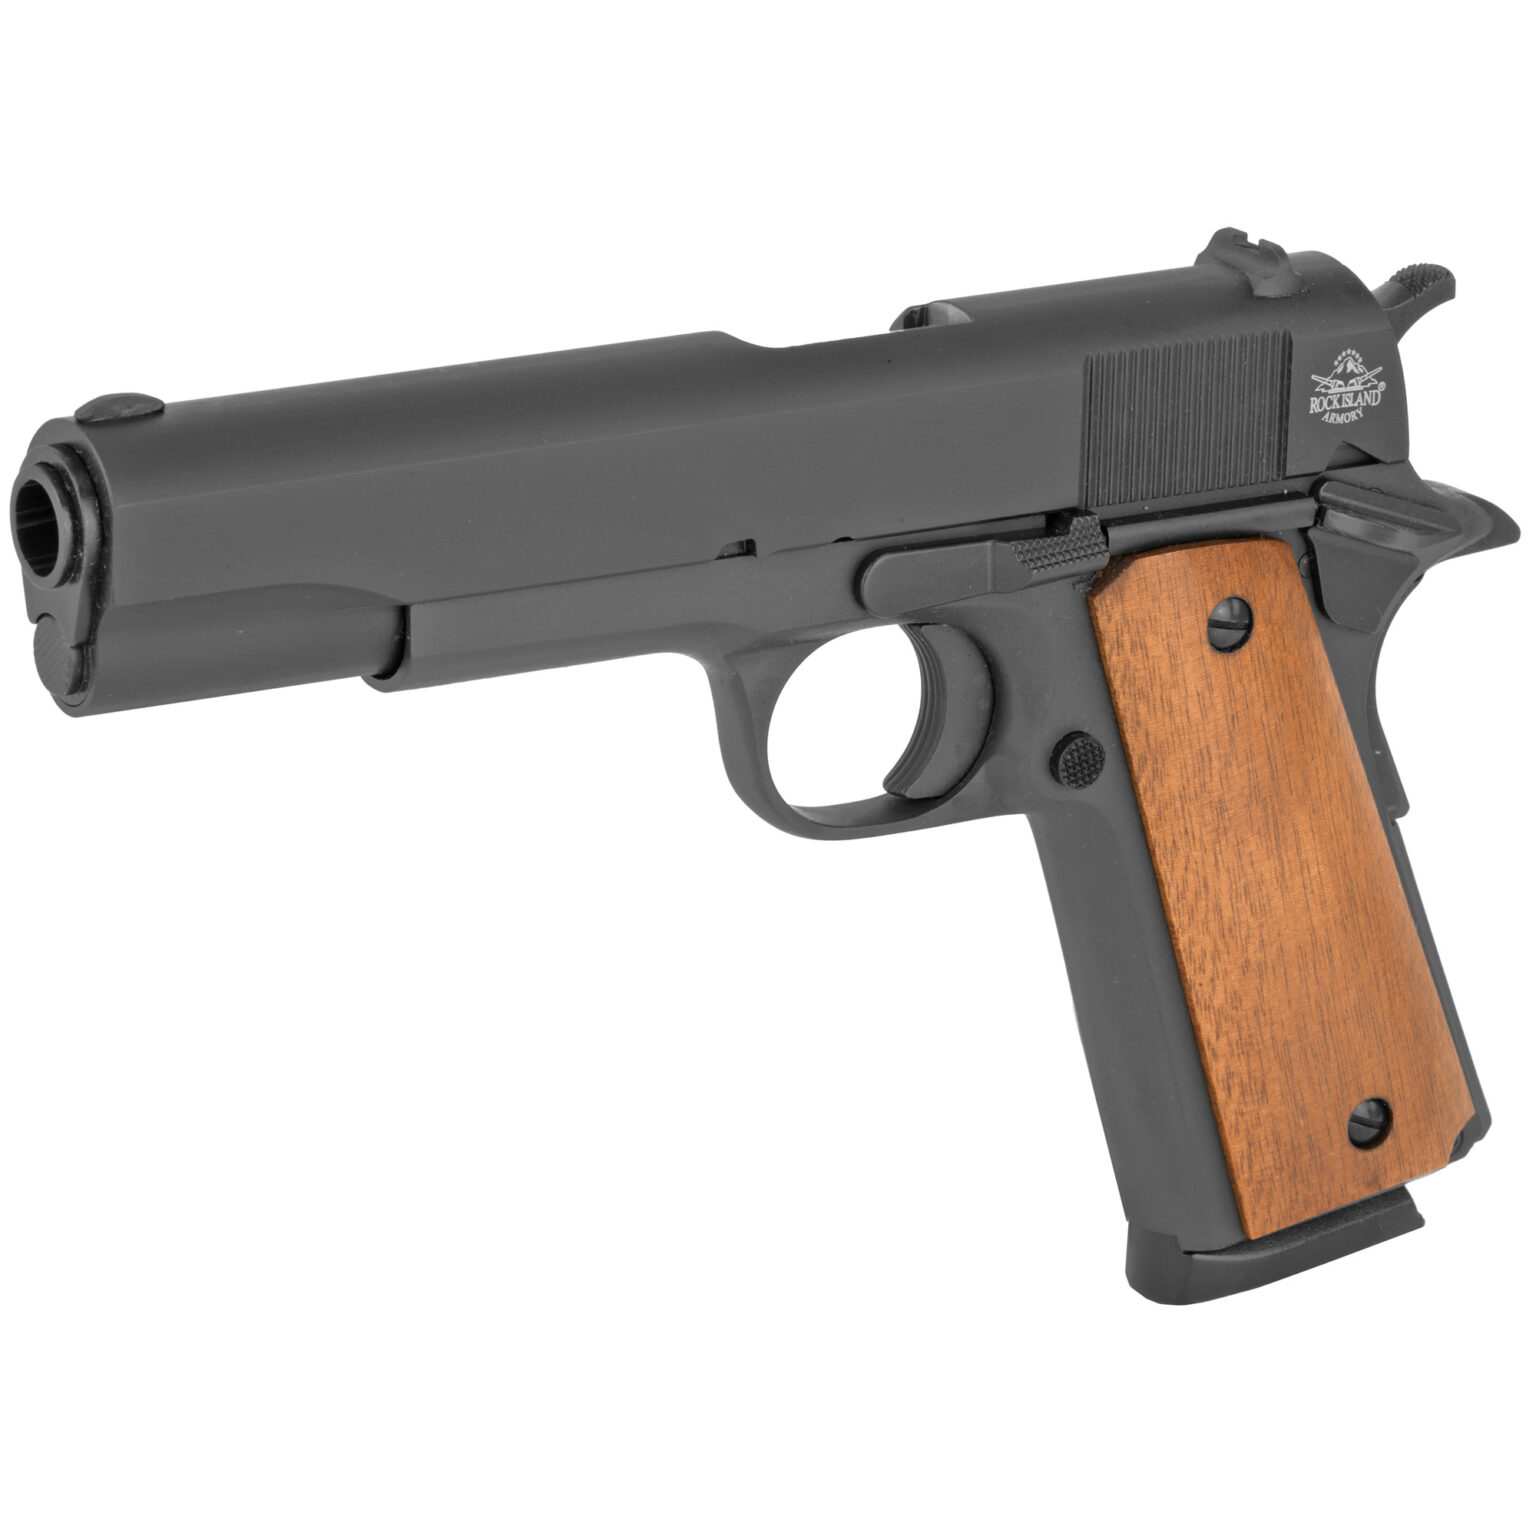 Armscor Rock Island Armory M1911 A1 Gi 1911 45acp Pistol Black Parkerized Finish Wood Grips 8945